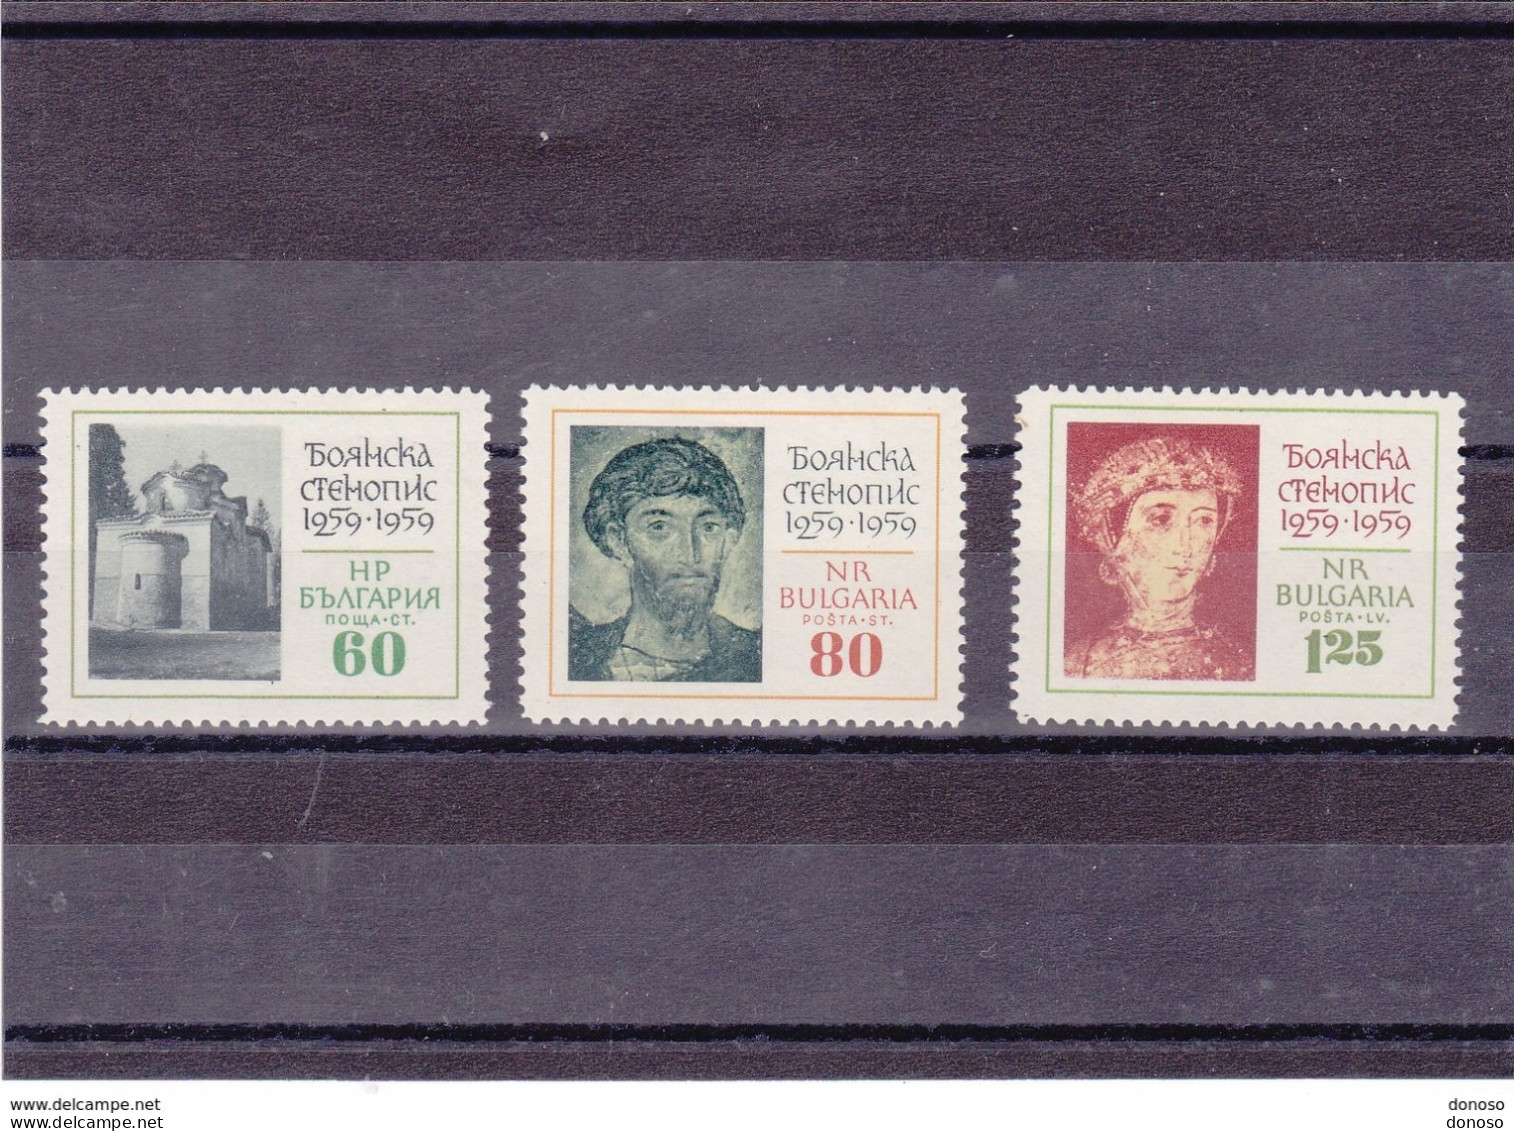 BULGARIE 1961 MONASTERE DE BOJANA Yvert 1041-1043, Michel 1194-1196 NEUF** MNH Cote 5,50 Euros - Unused Stamps